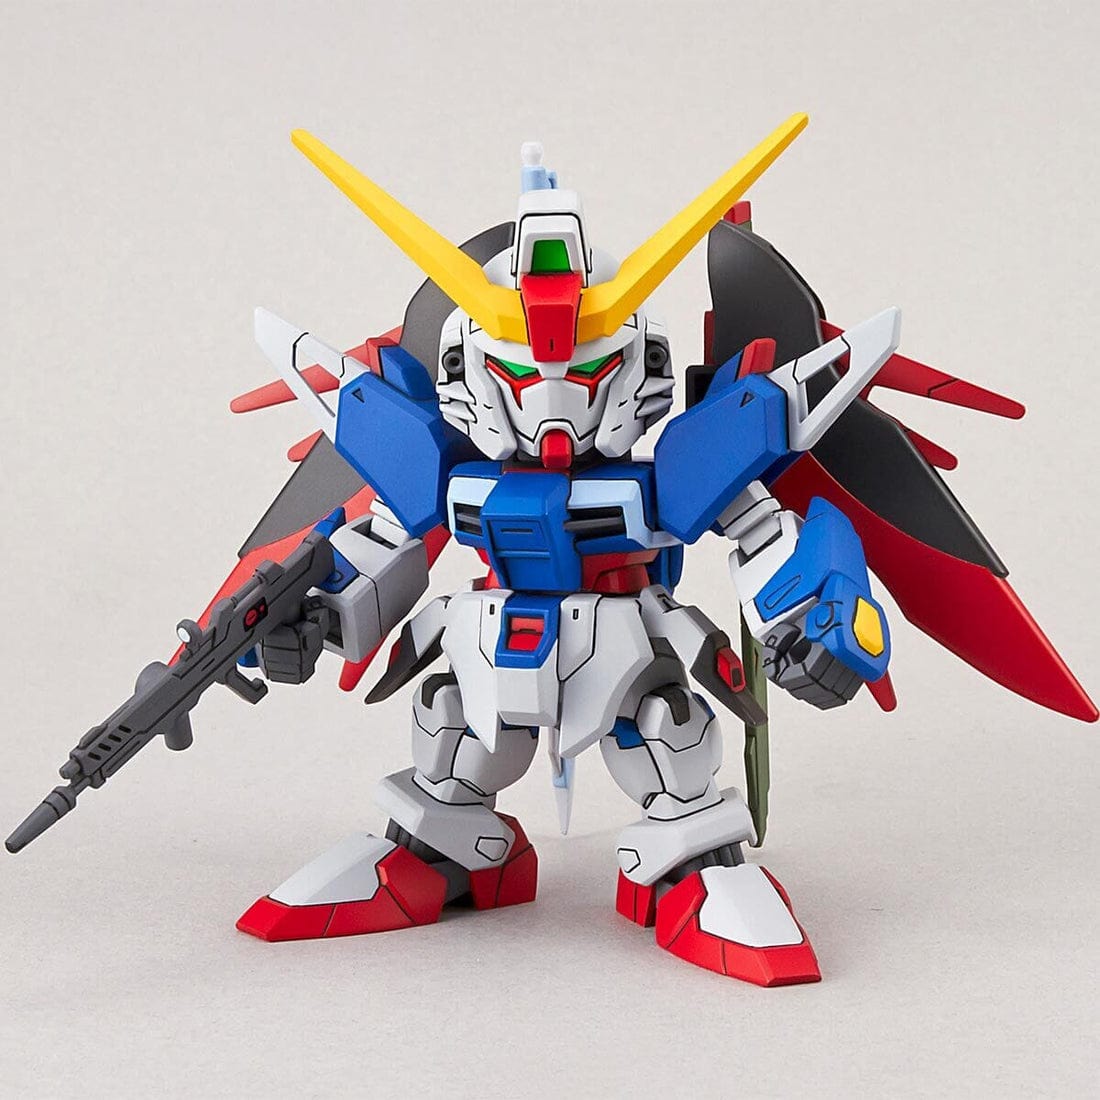 Bandai Scale Model Kits SD-EX STD #009 Destiny Gundam